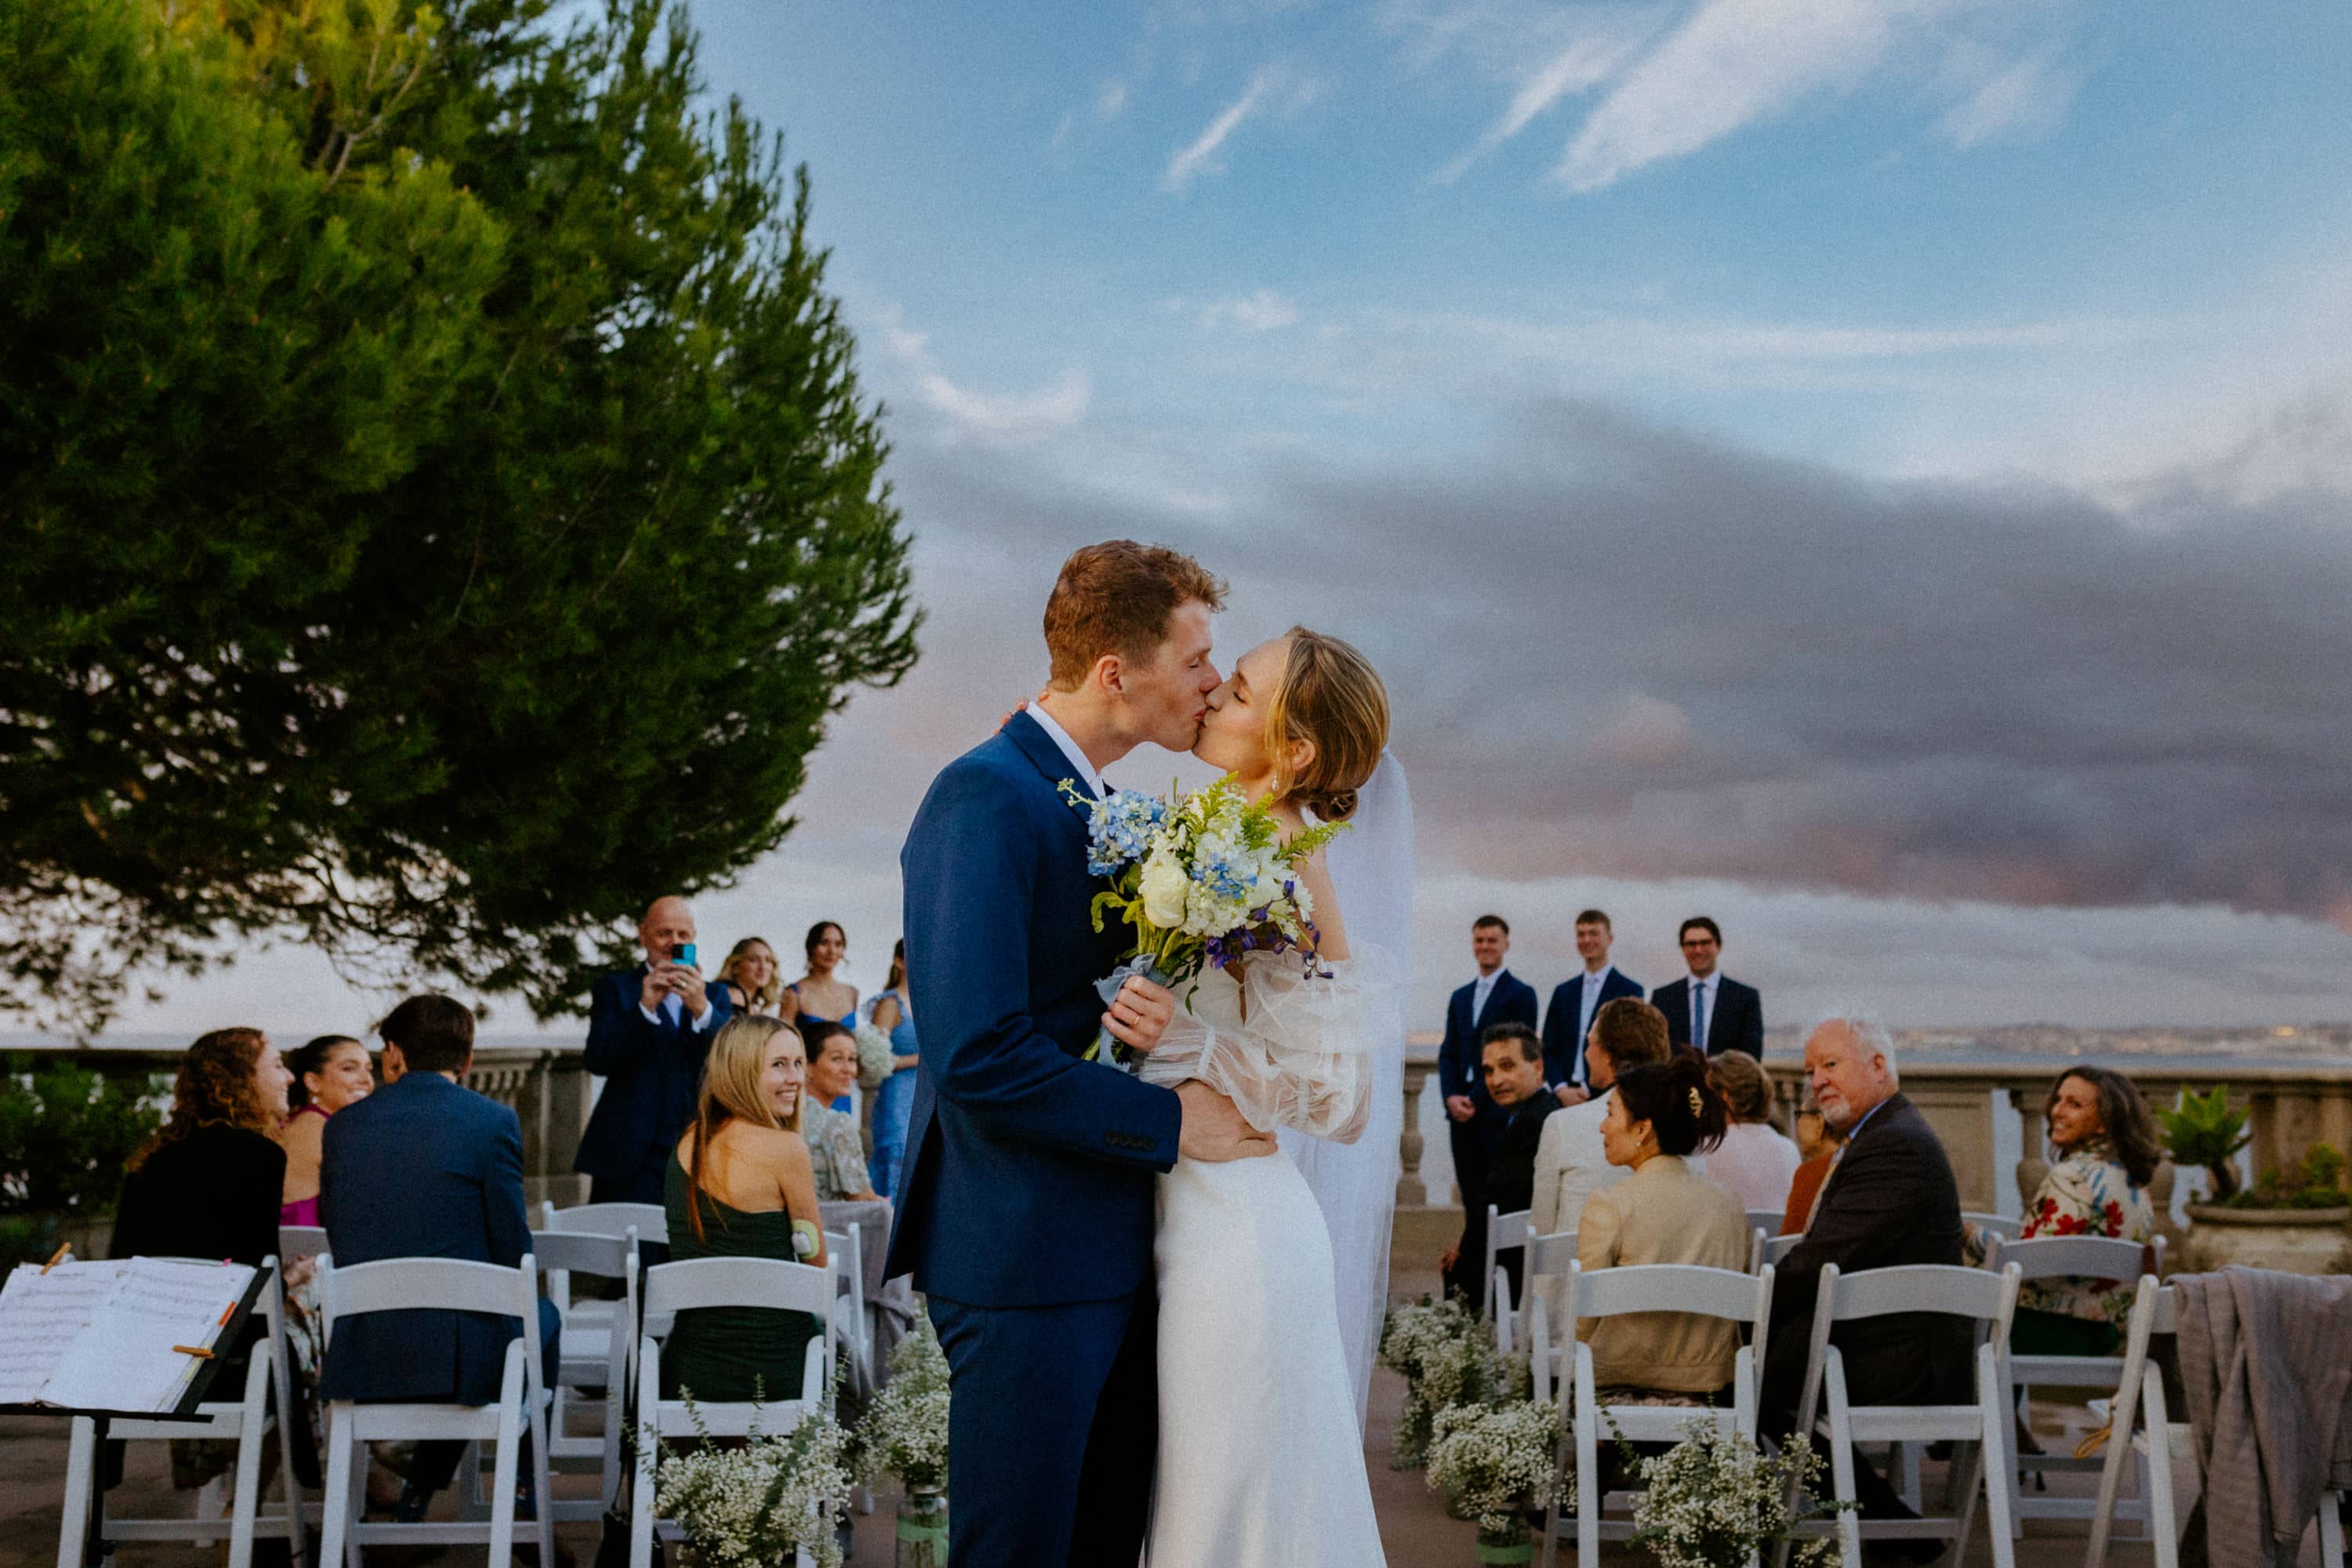 Top 5 Wedding Photo Editing Styles